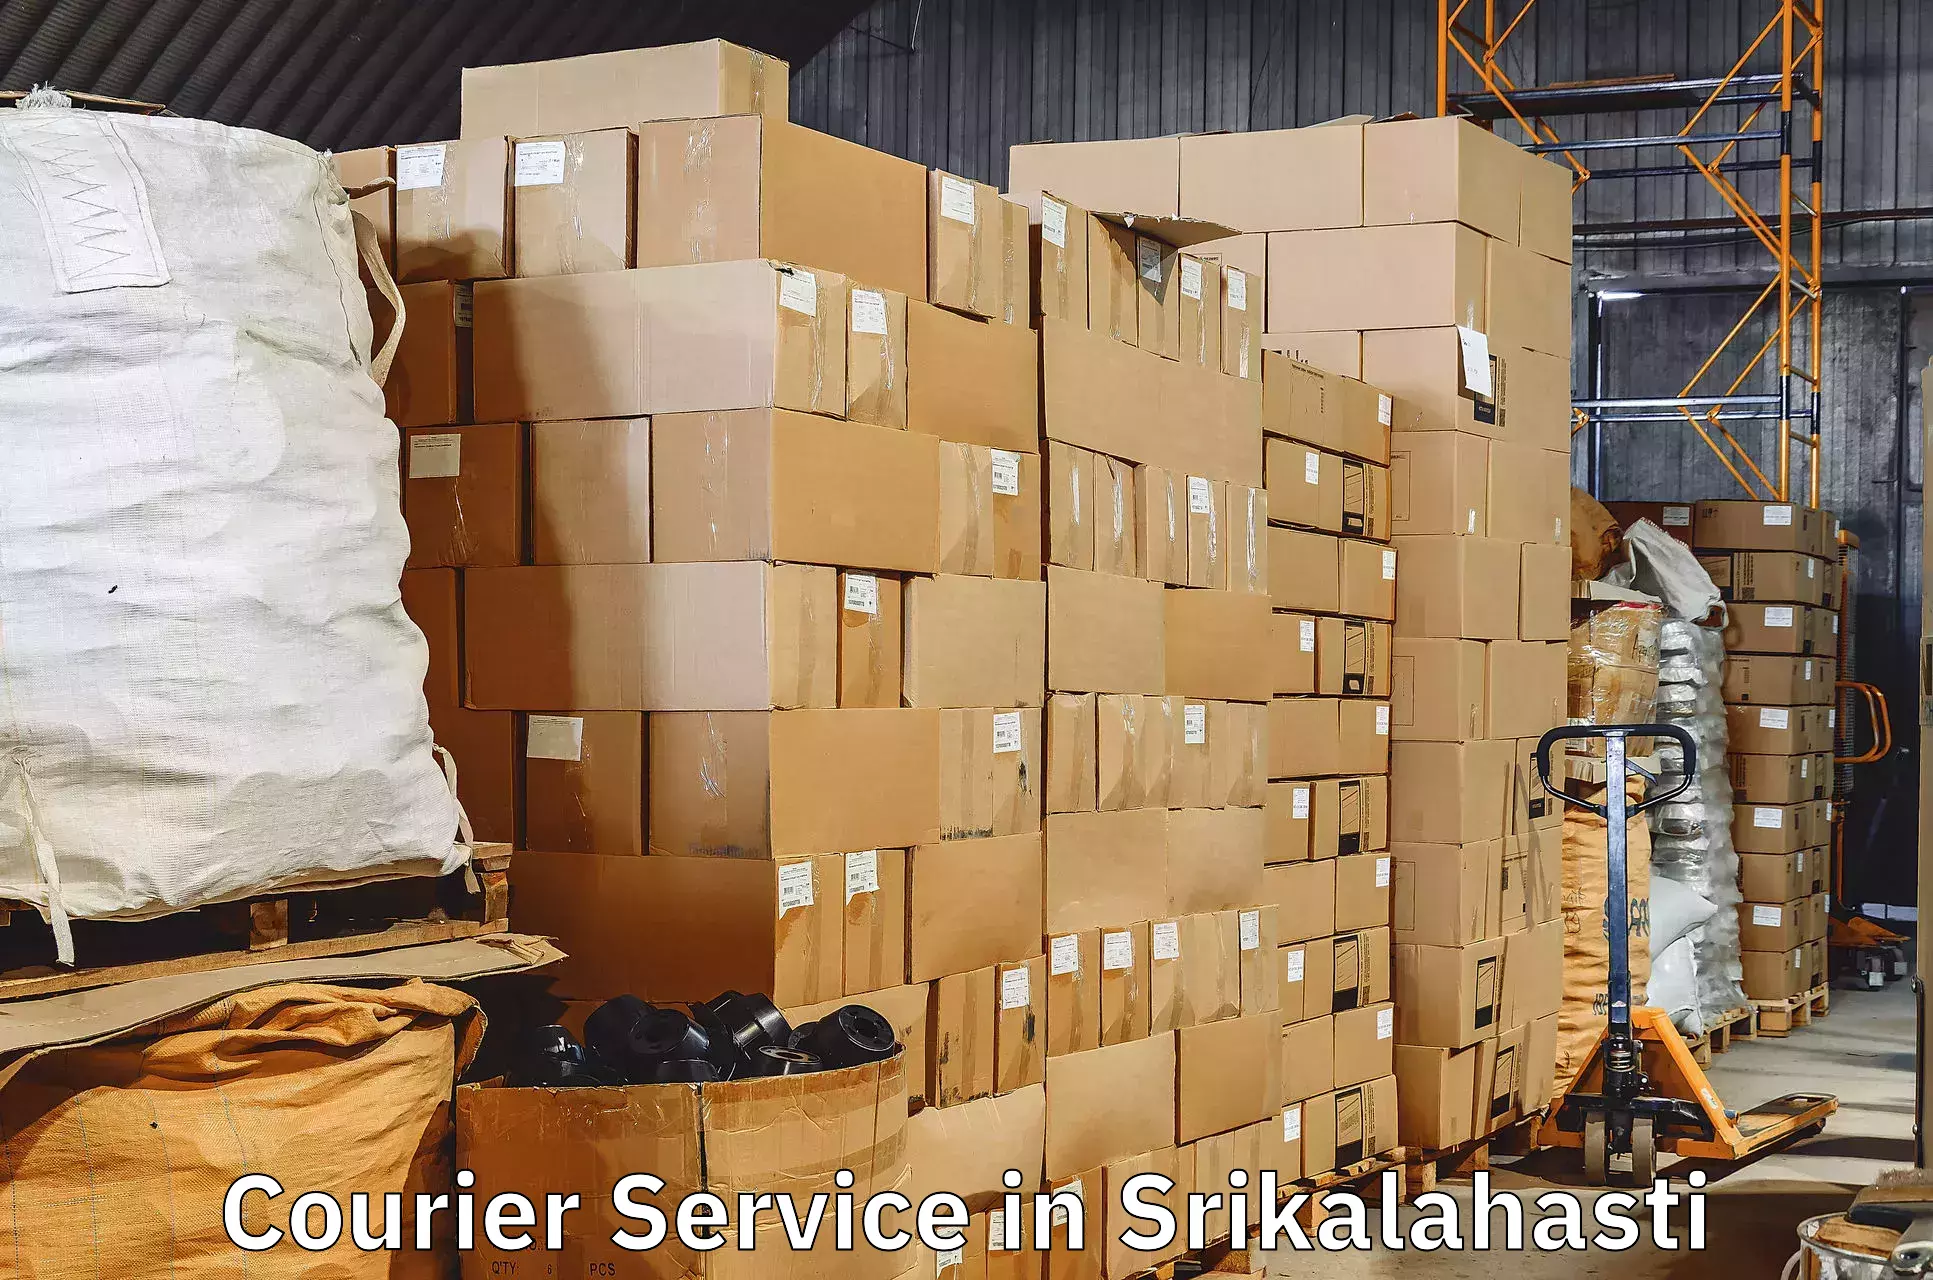 Emergency parcel delivery in Srikalahasti